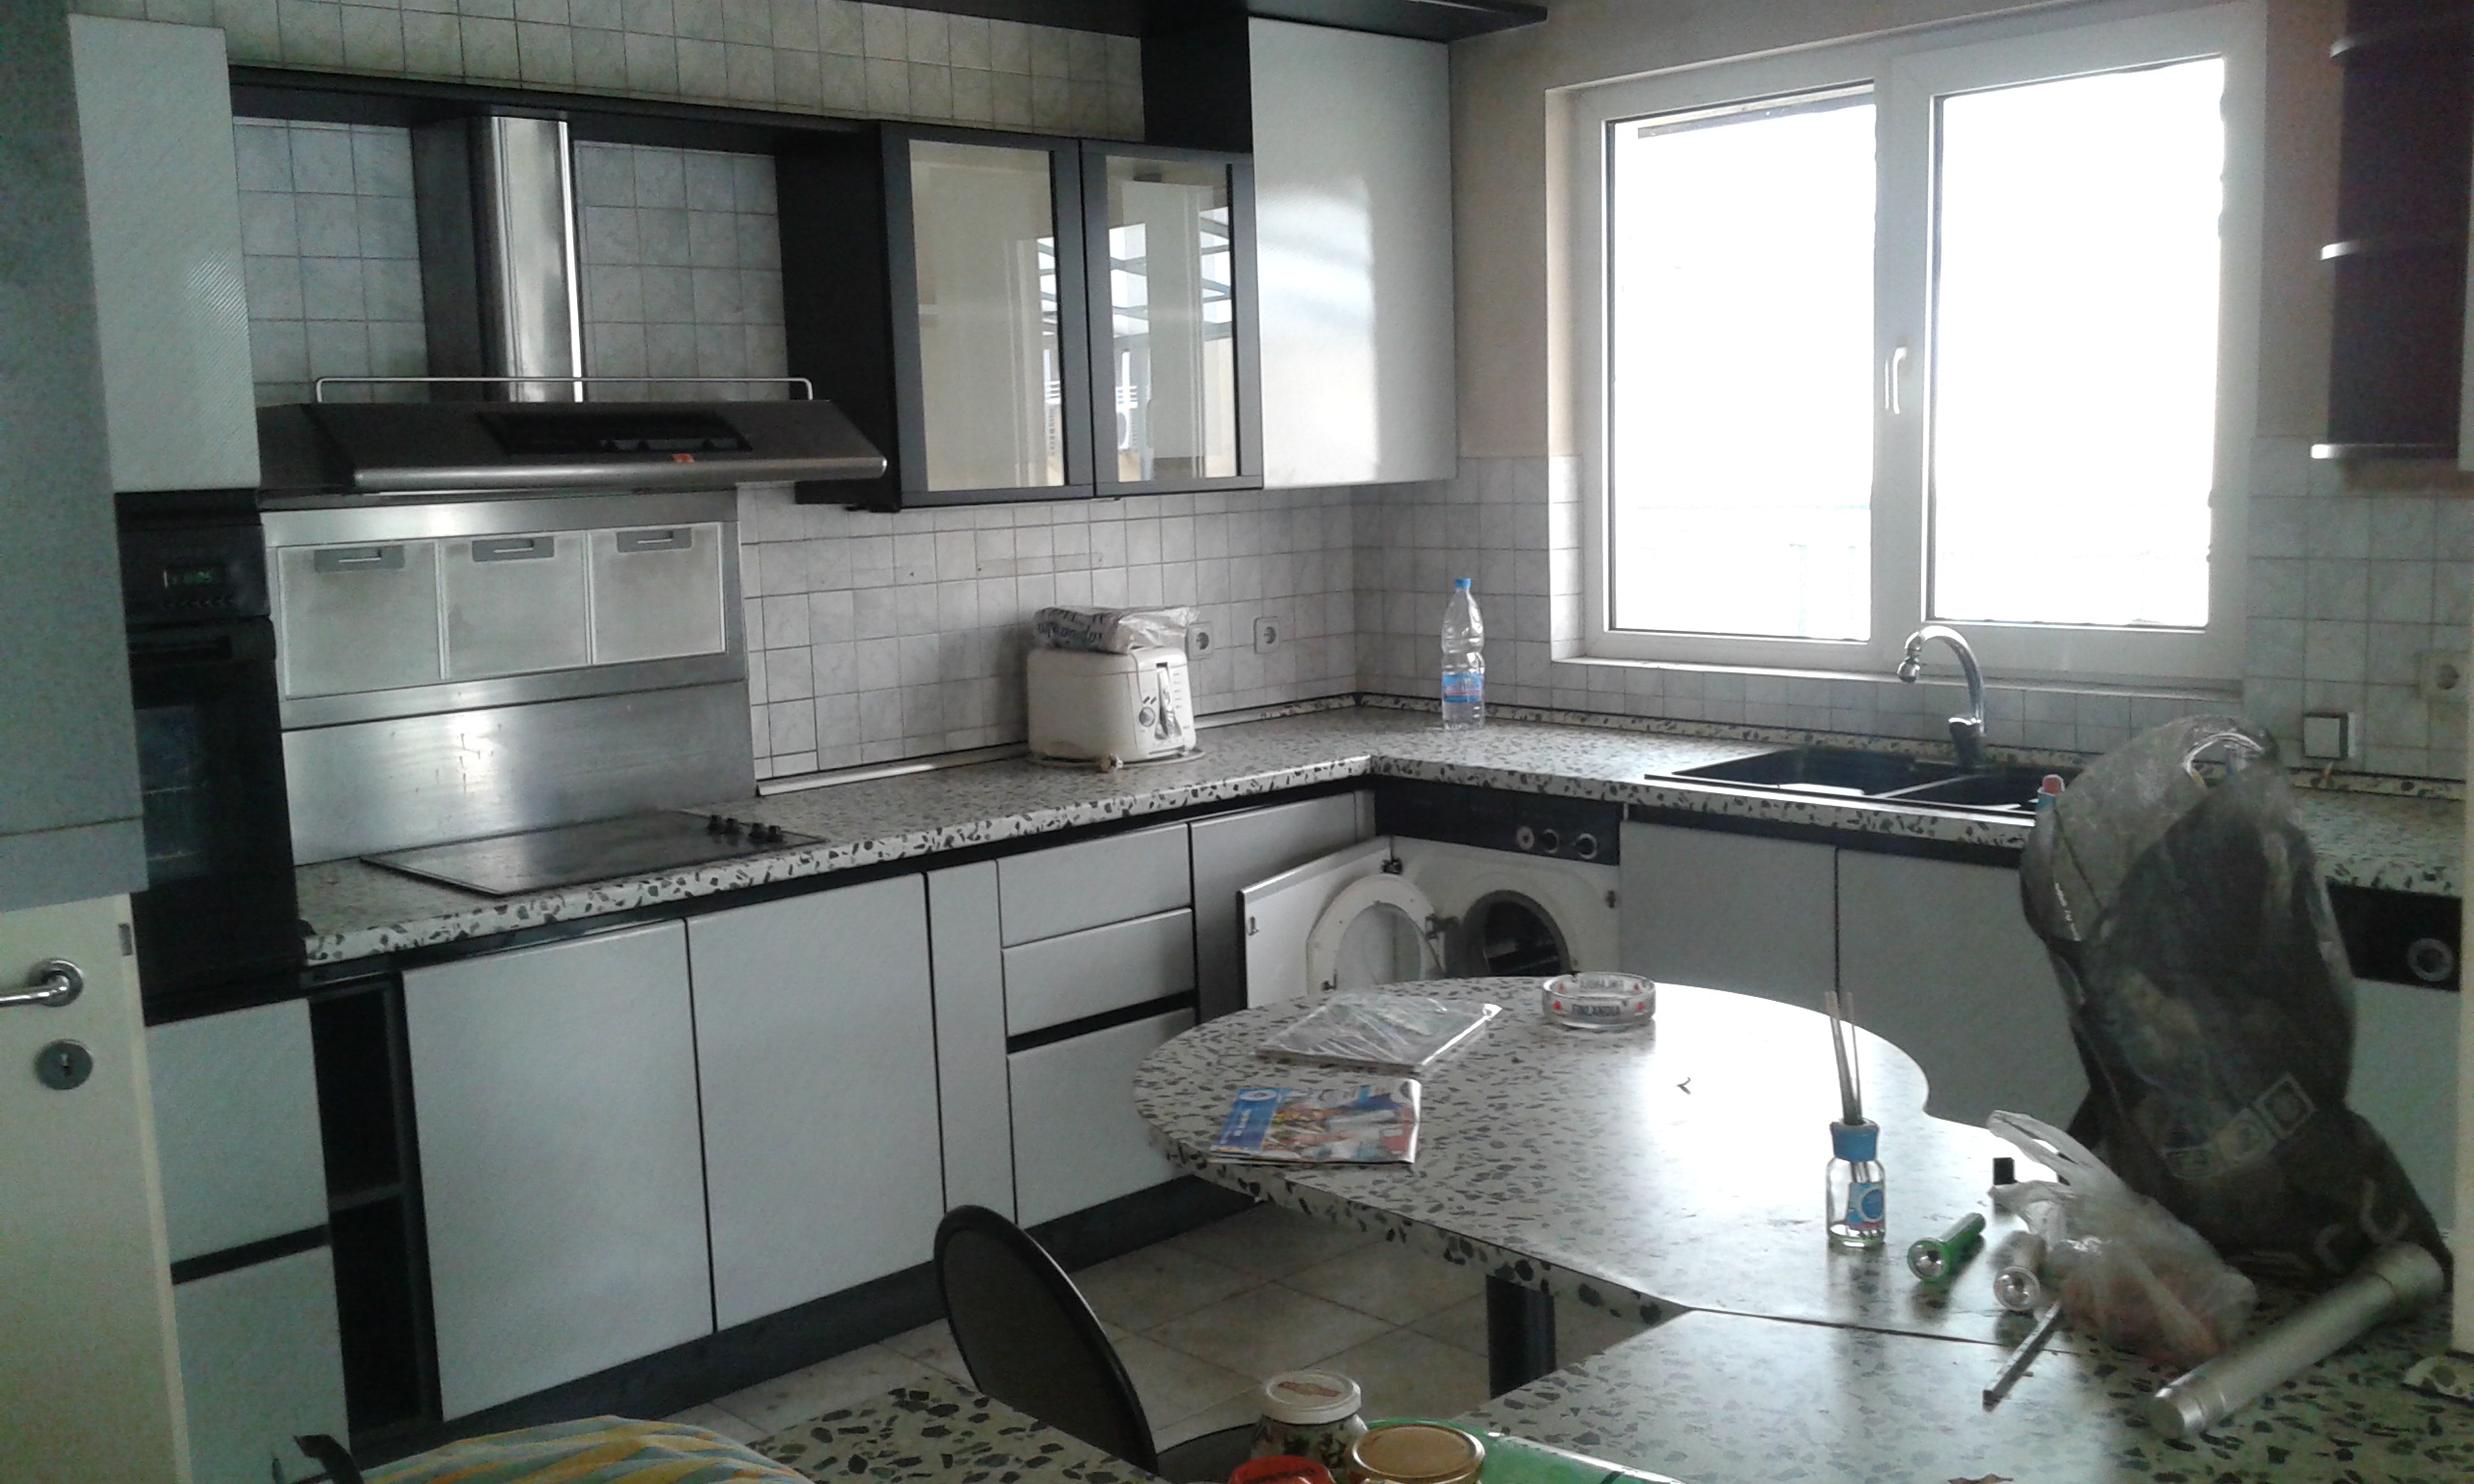 4 стаен апартамент с два гаража, ж.к. Борово, цена 132900 евро- ПРОДАДЕН - image